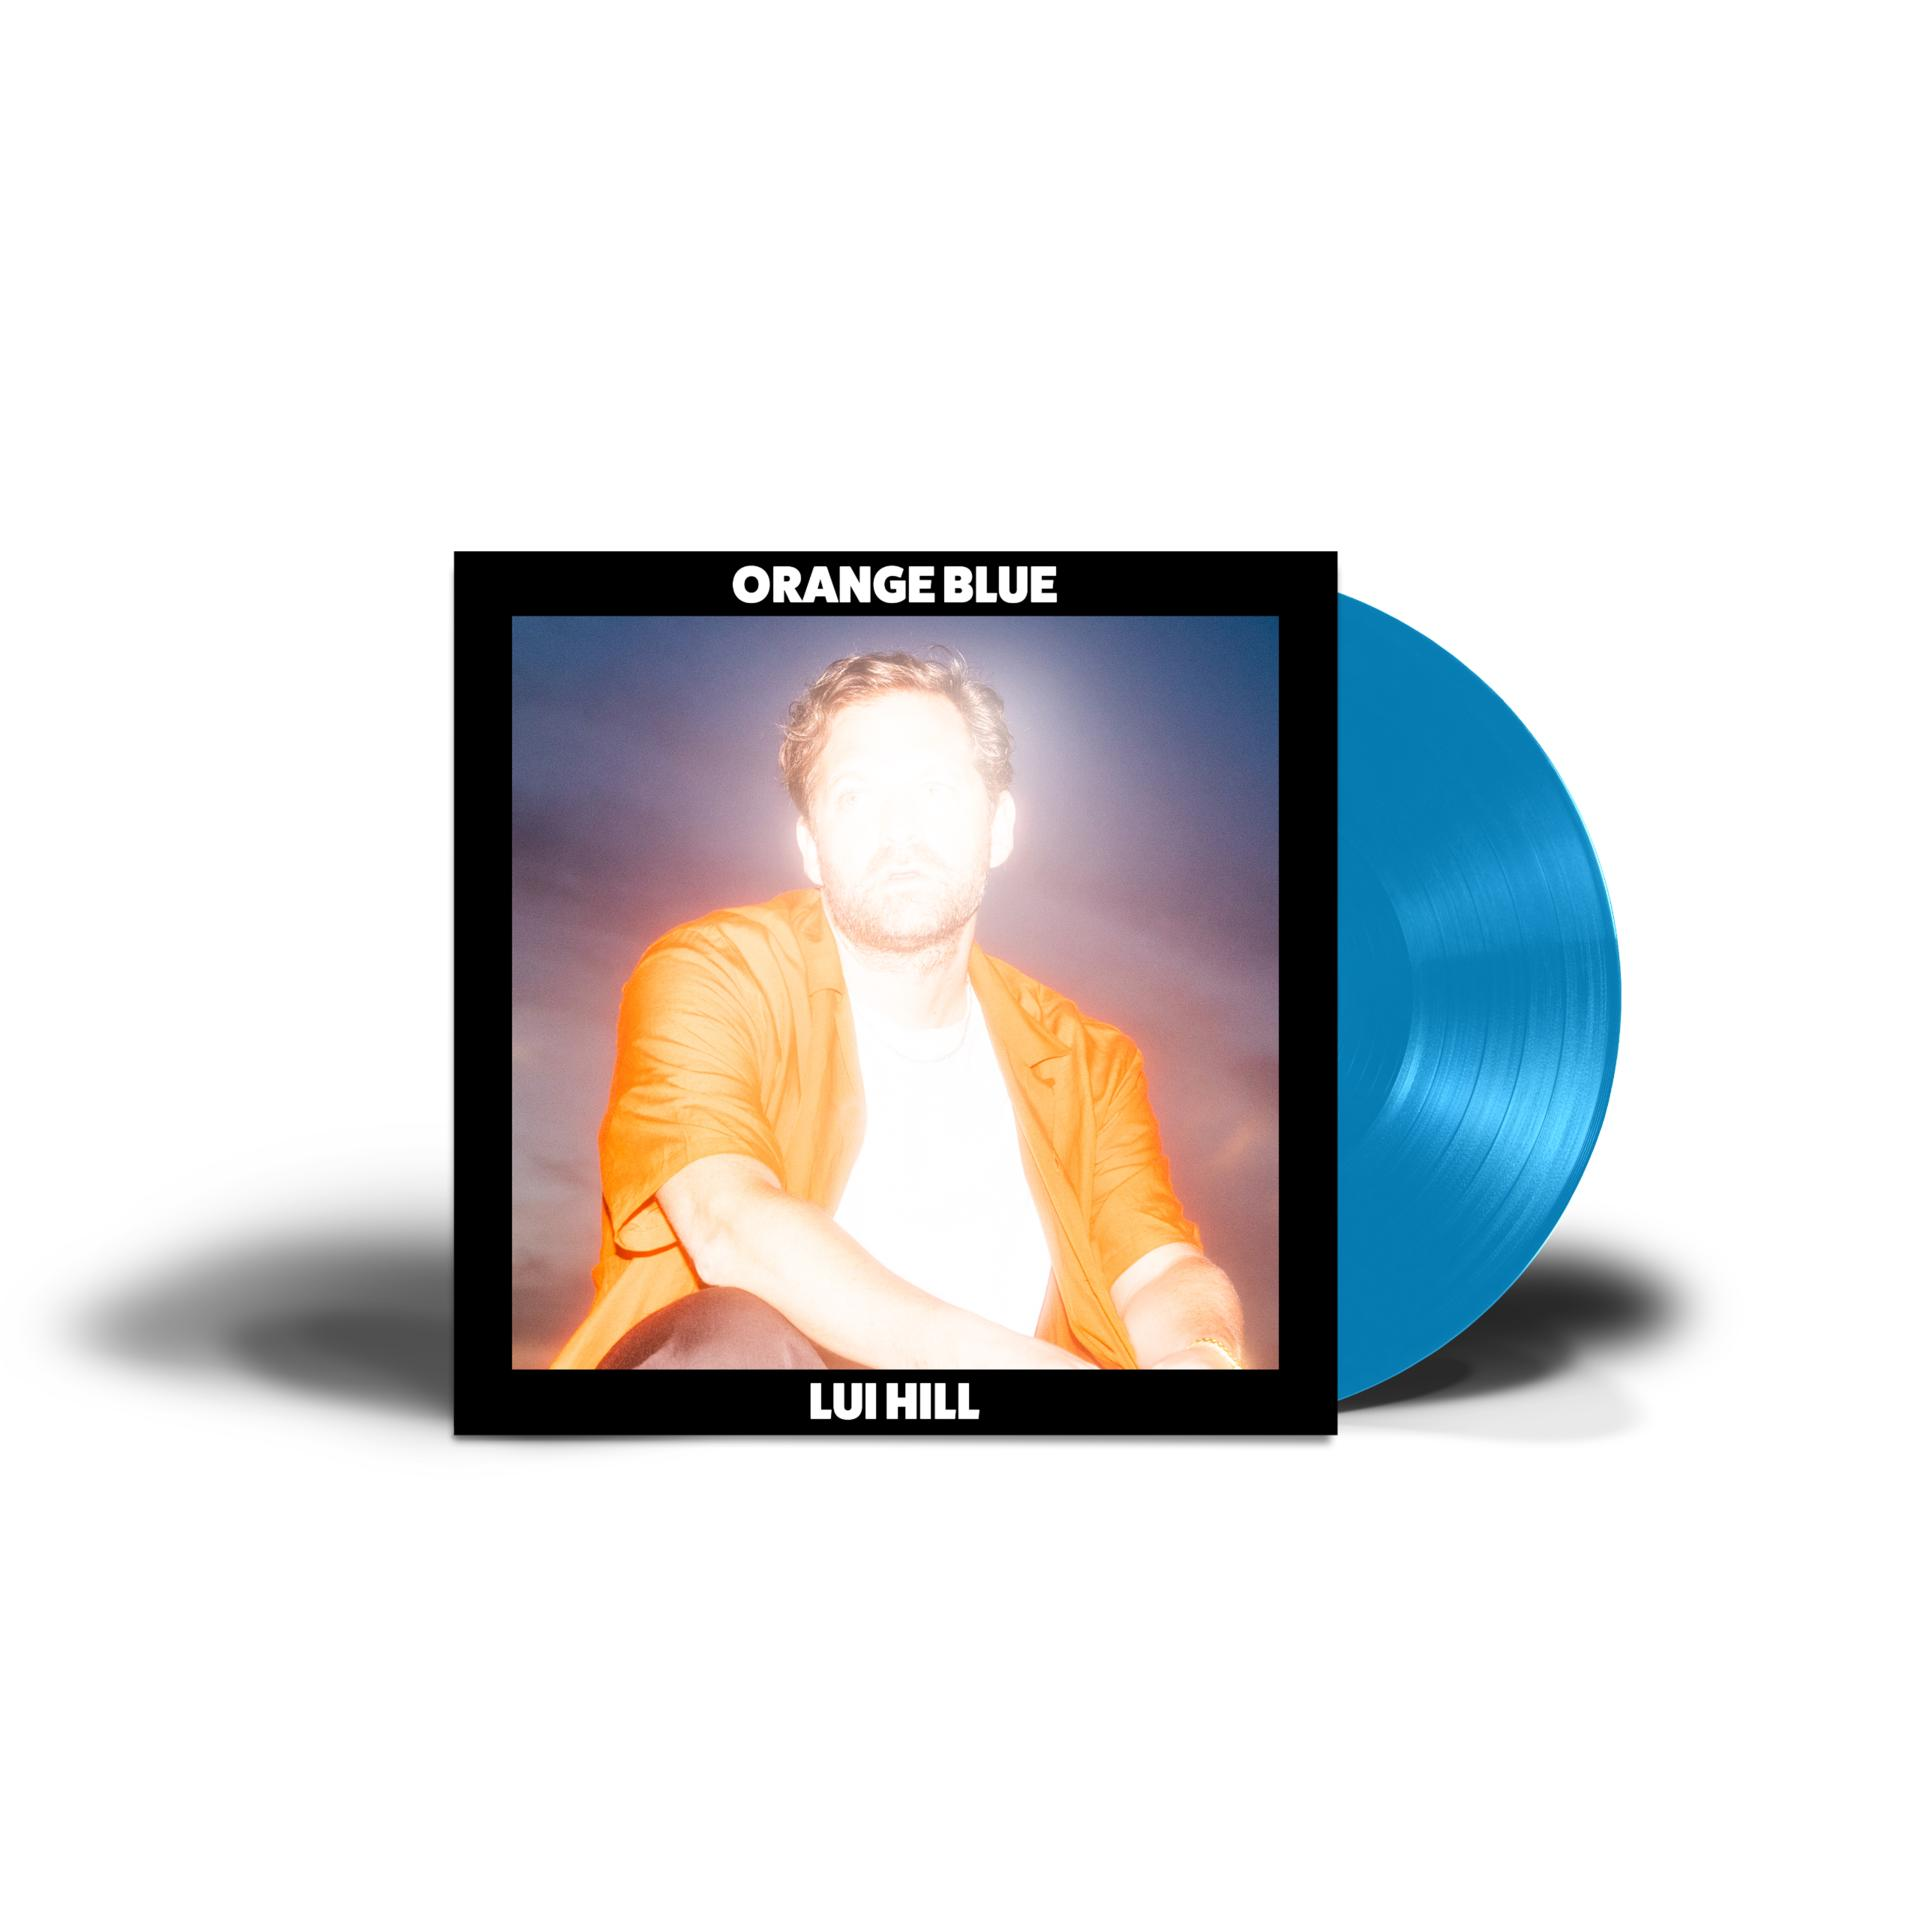 Blue (Blue Hill Lui - (Vinyl) Vinyl) Orange -